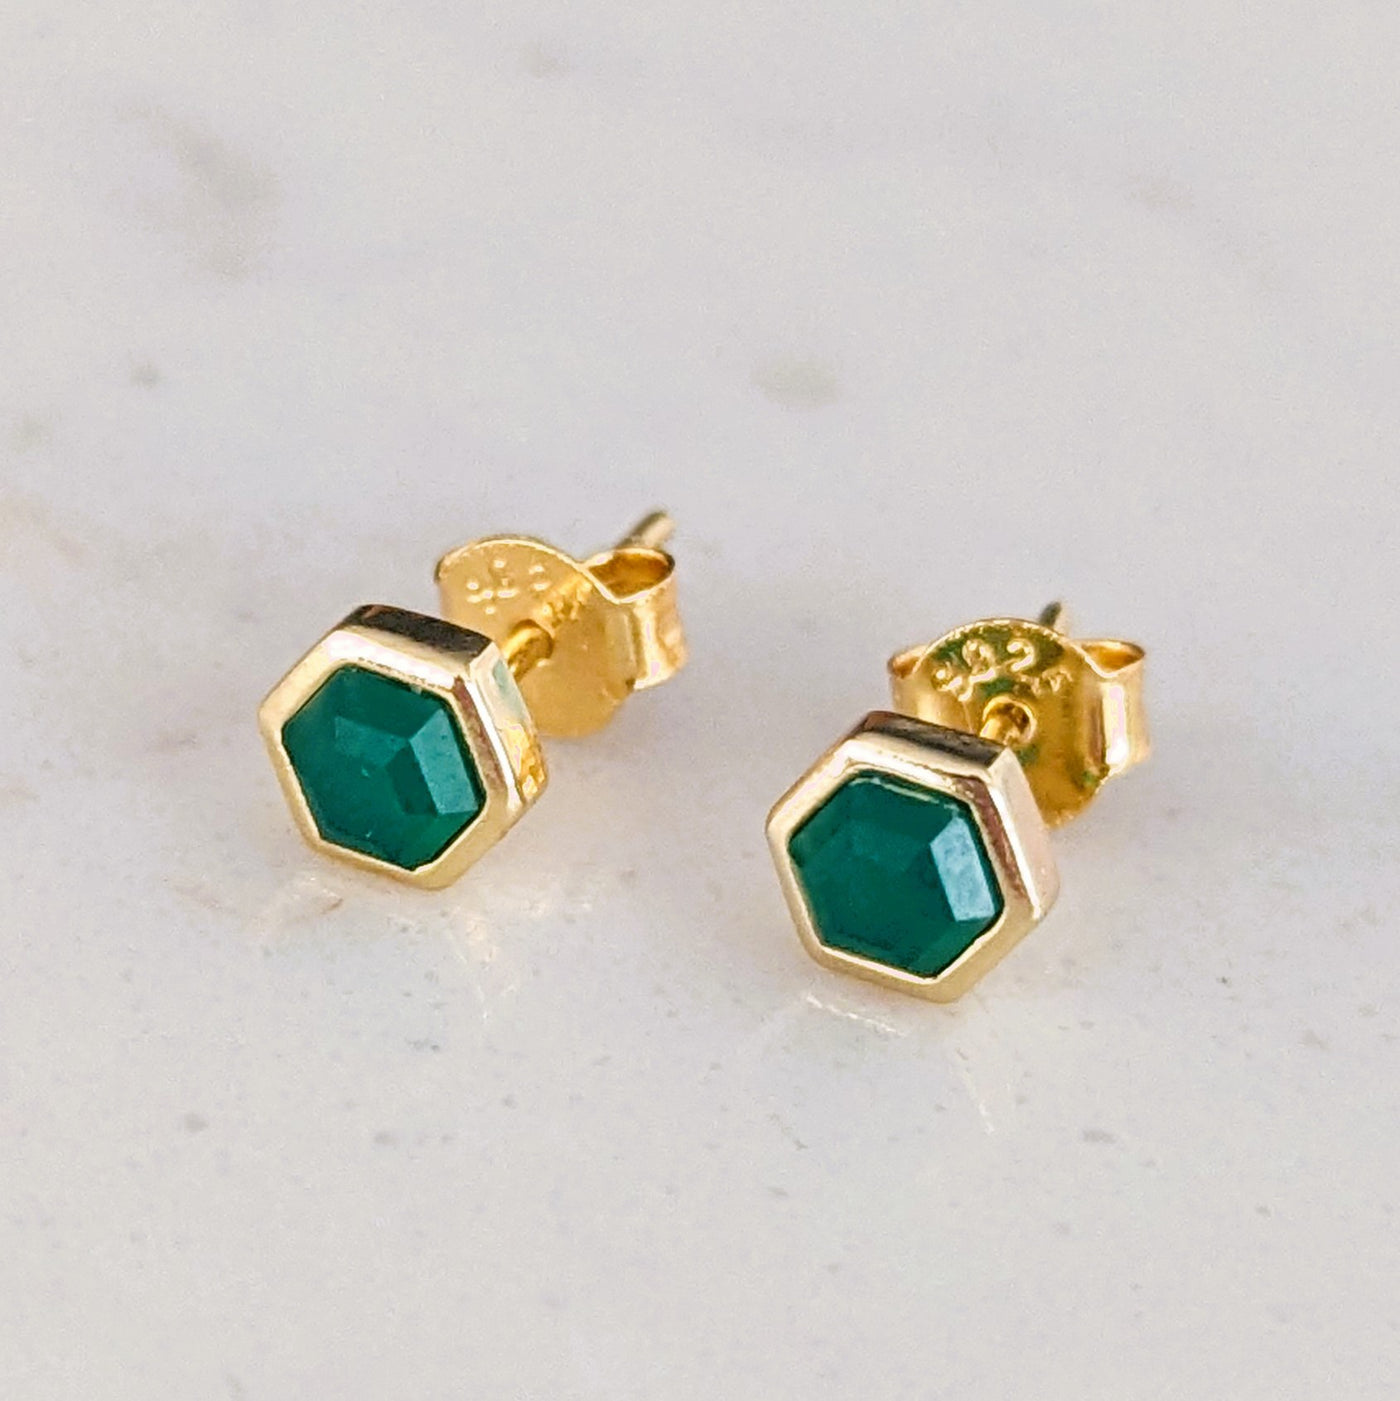 18 carat gold plated green onyx hexagon stud earrings